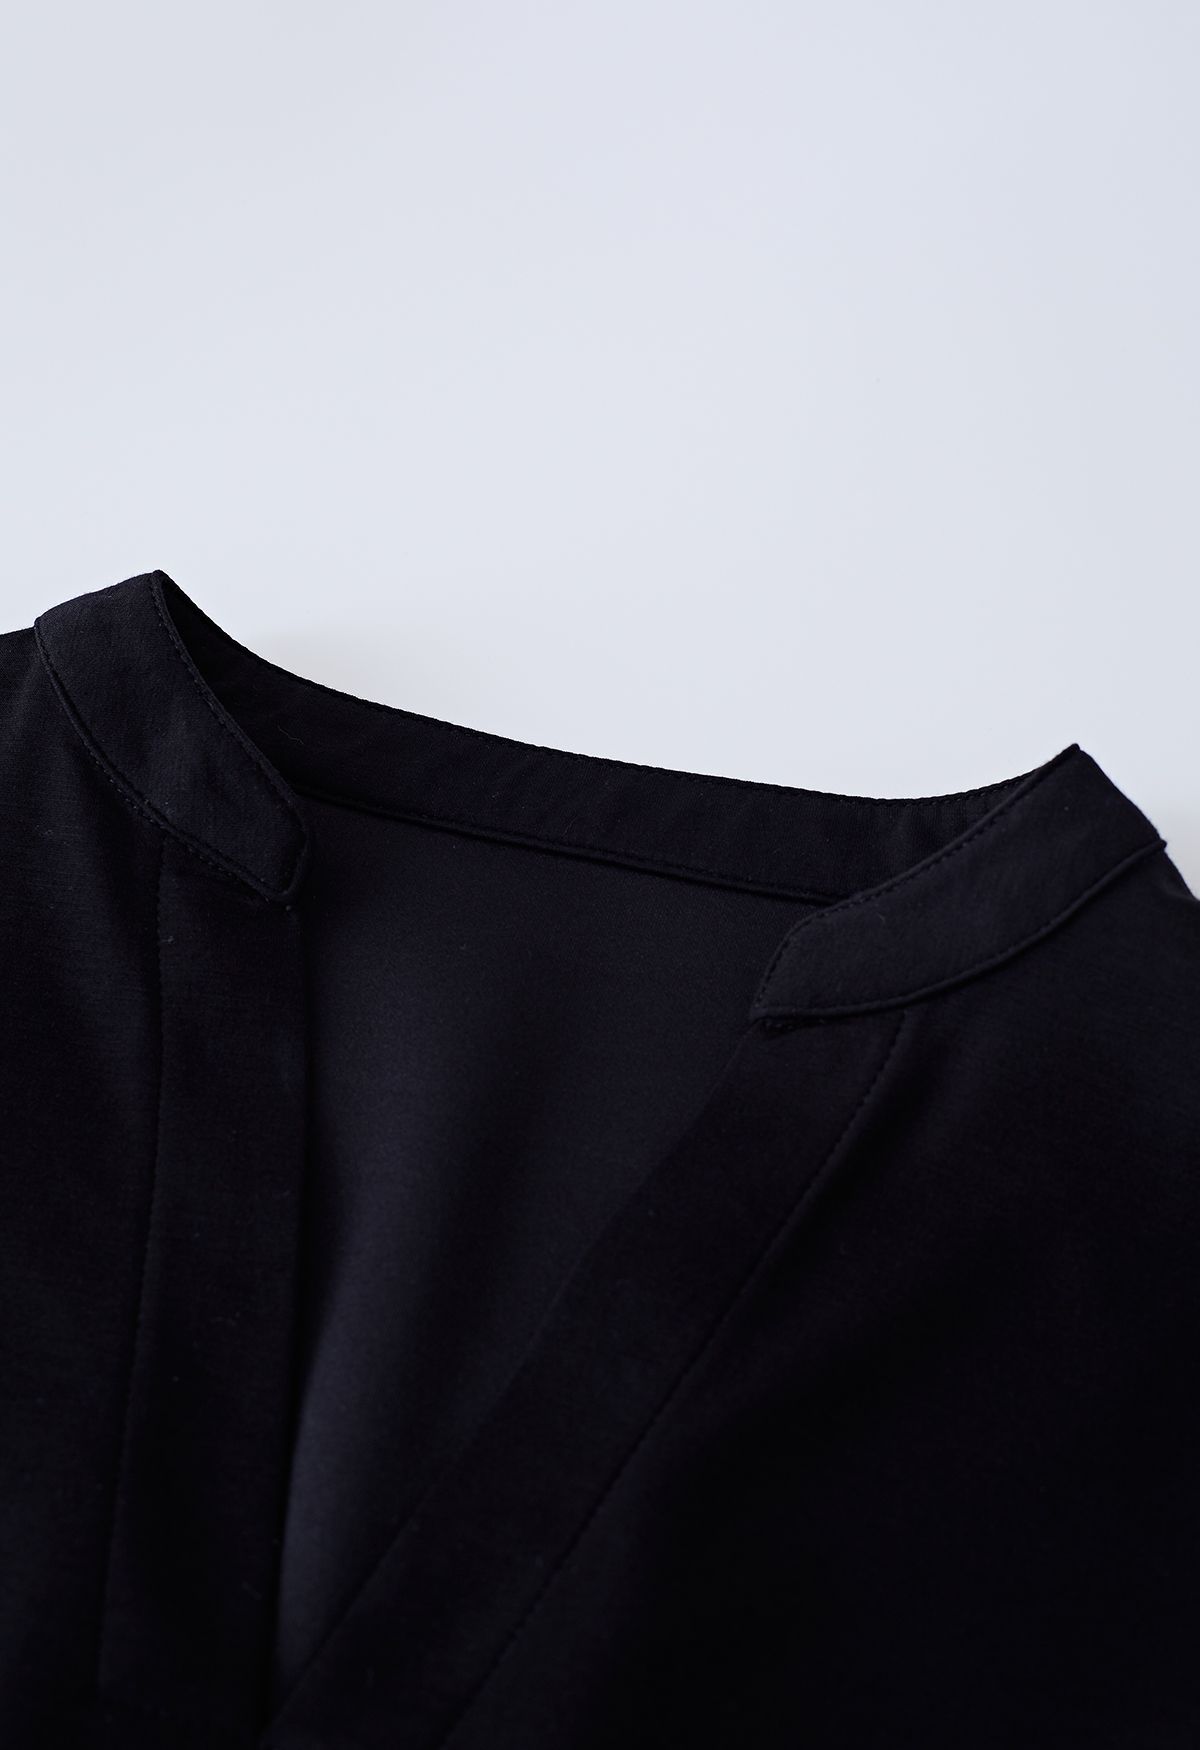 Padded Shoulder V-Neck Sleeveless Top in Black